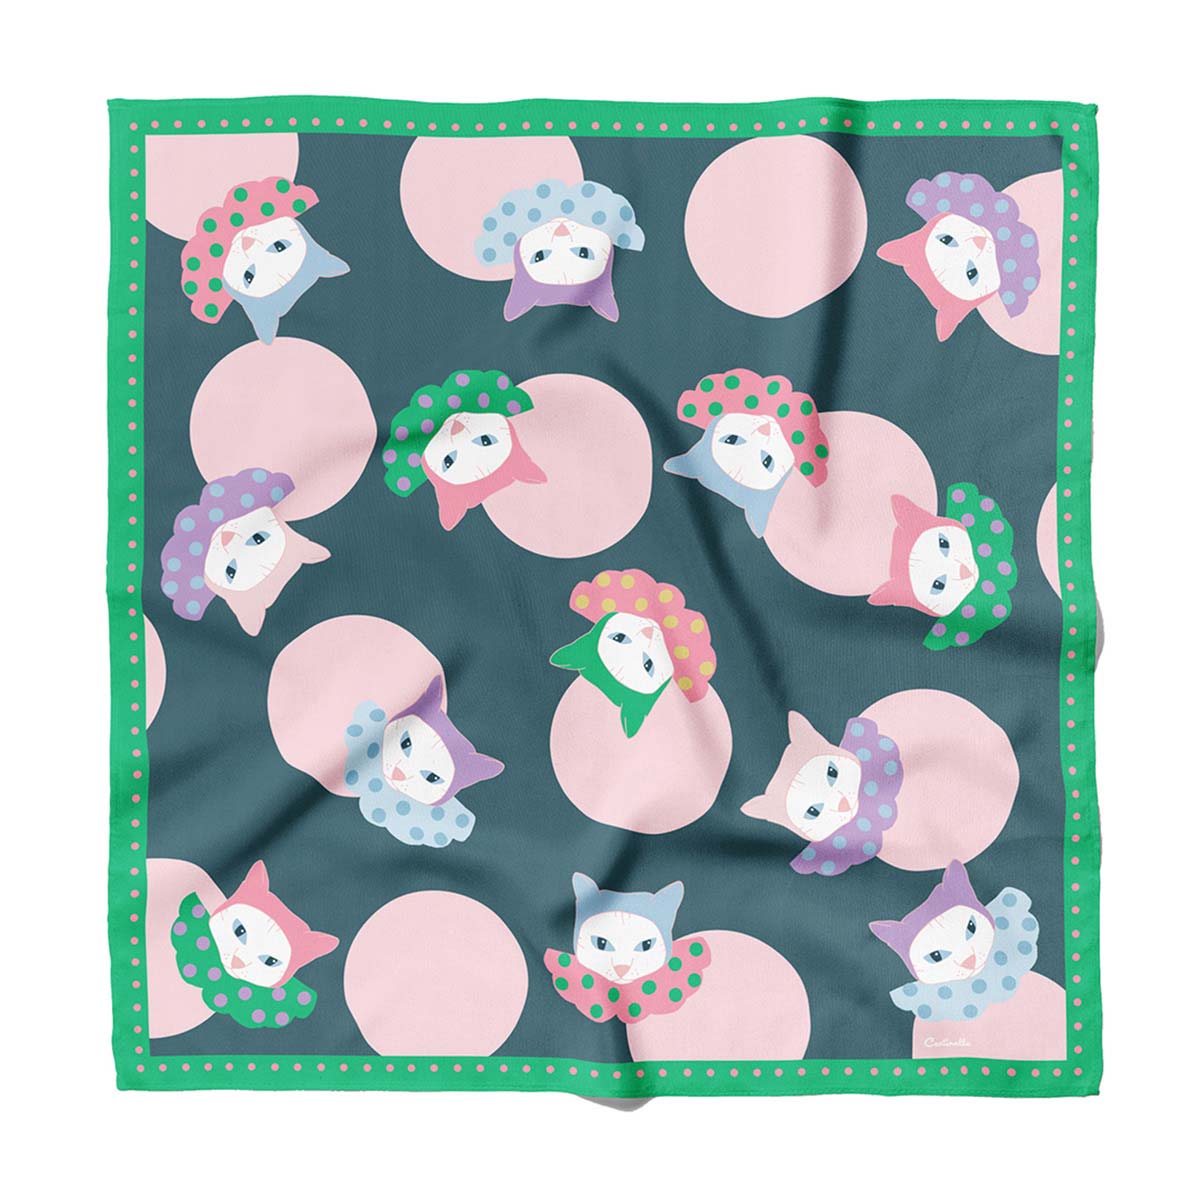 Pink polka dots and cat clowns on cotton silk blend bandana